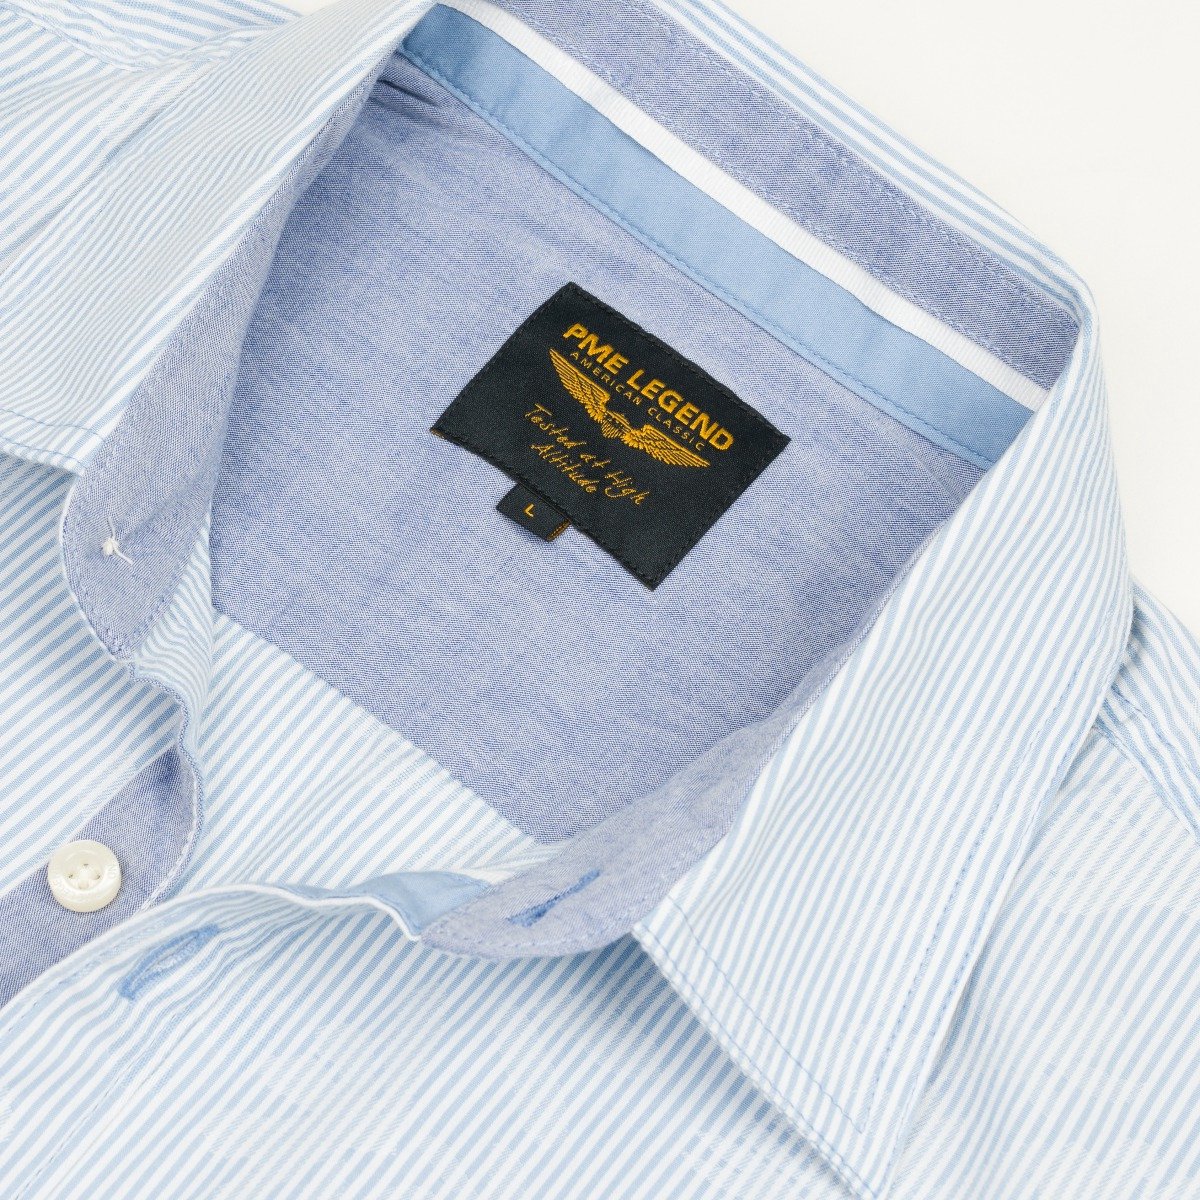 PME Legend - Overhemden Stripe Leaf Jacquard Adley Blauw - Maat M bol.com